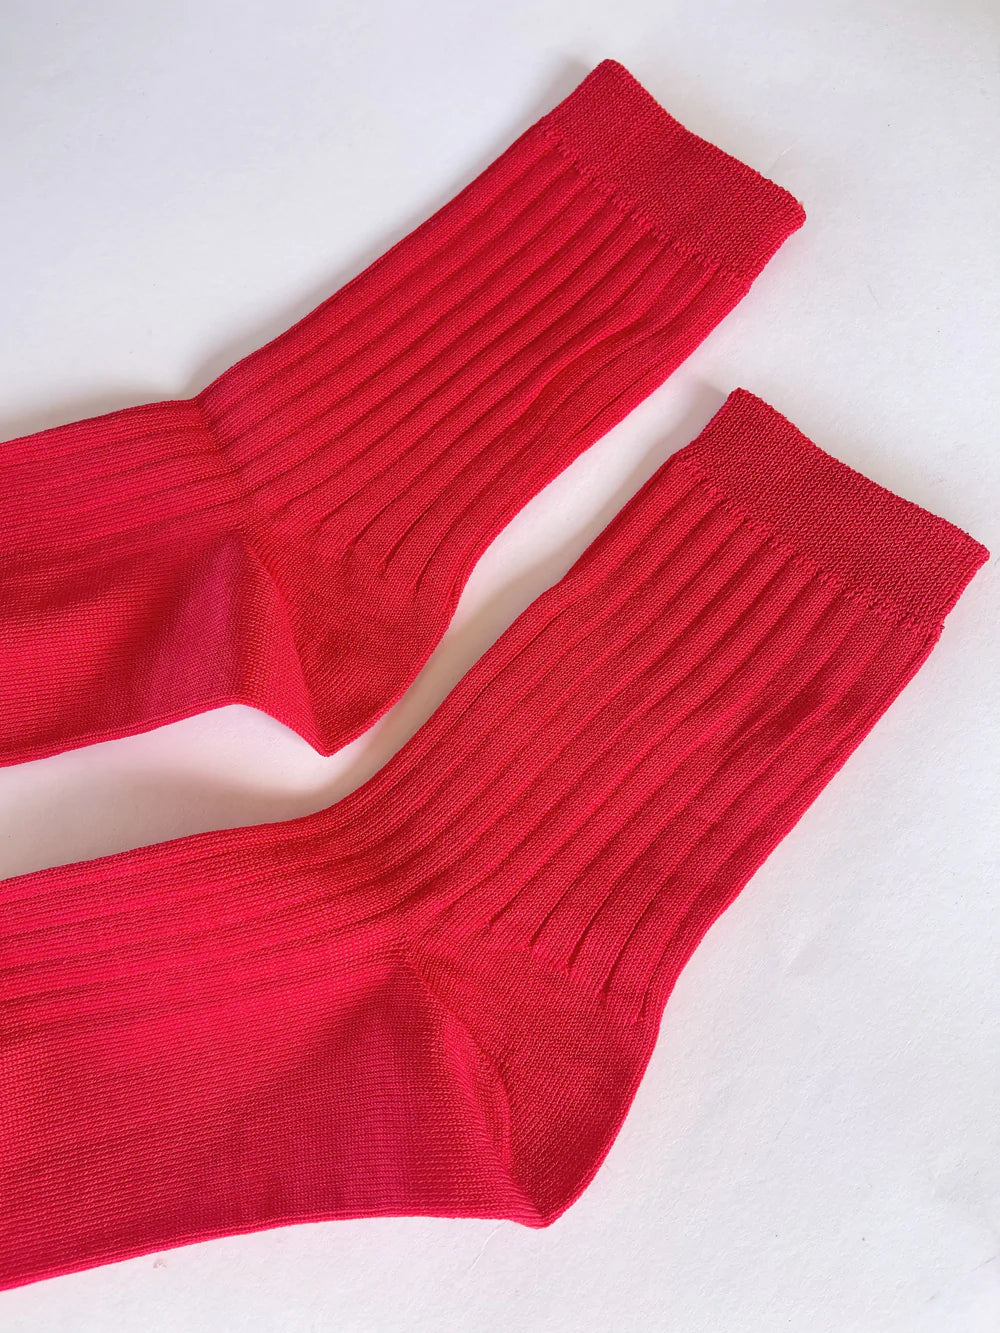 Le Bon Shoppe Classic Red Her Socks